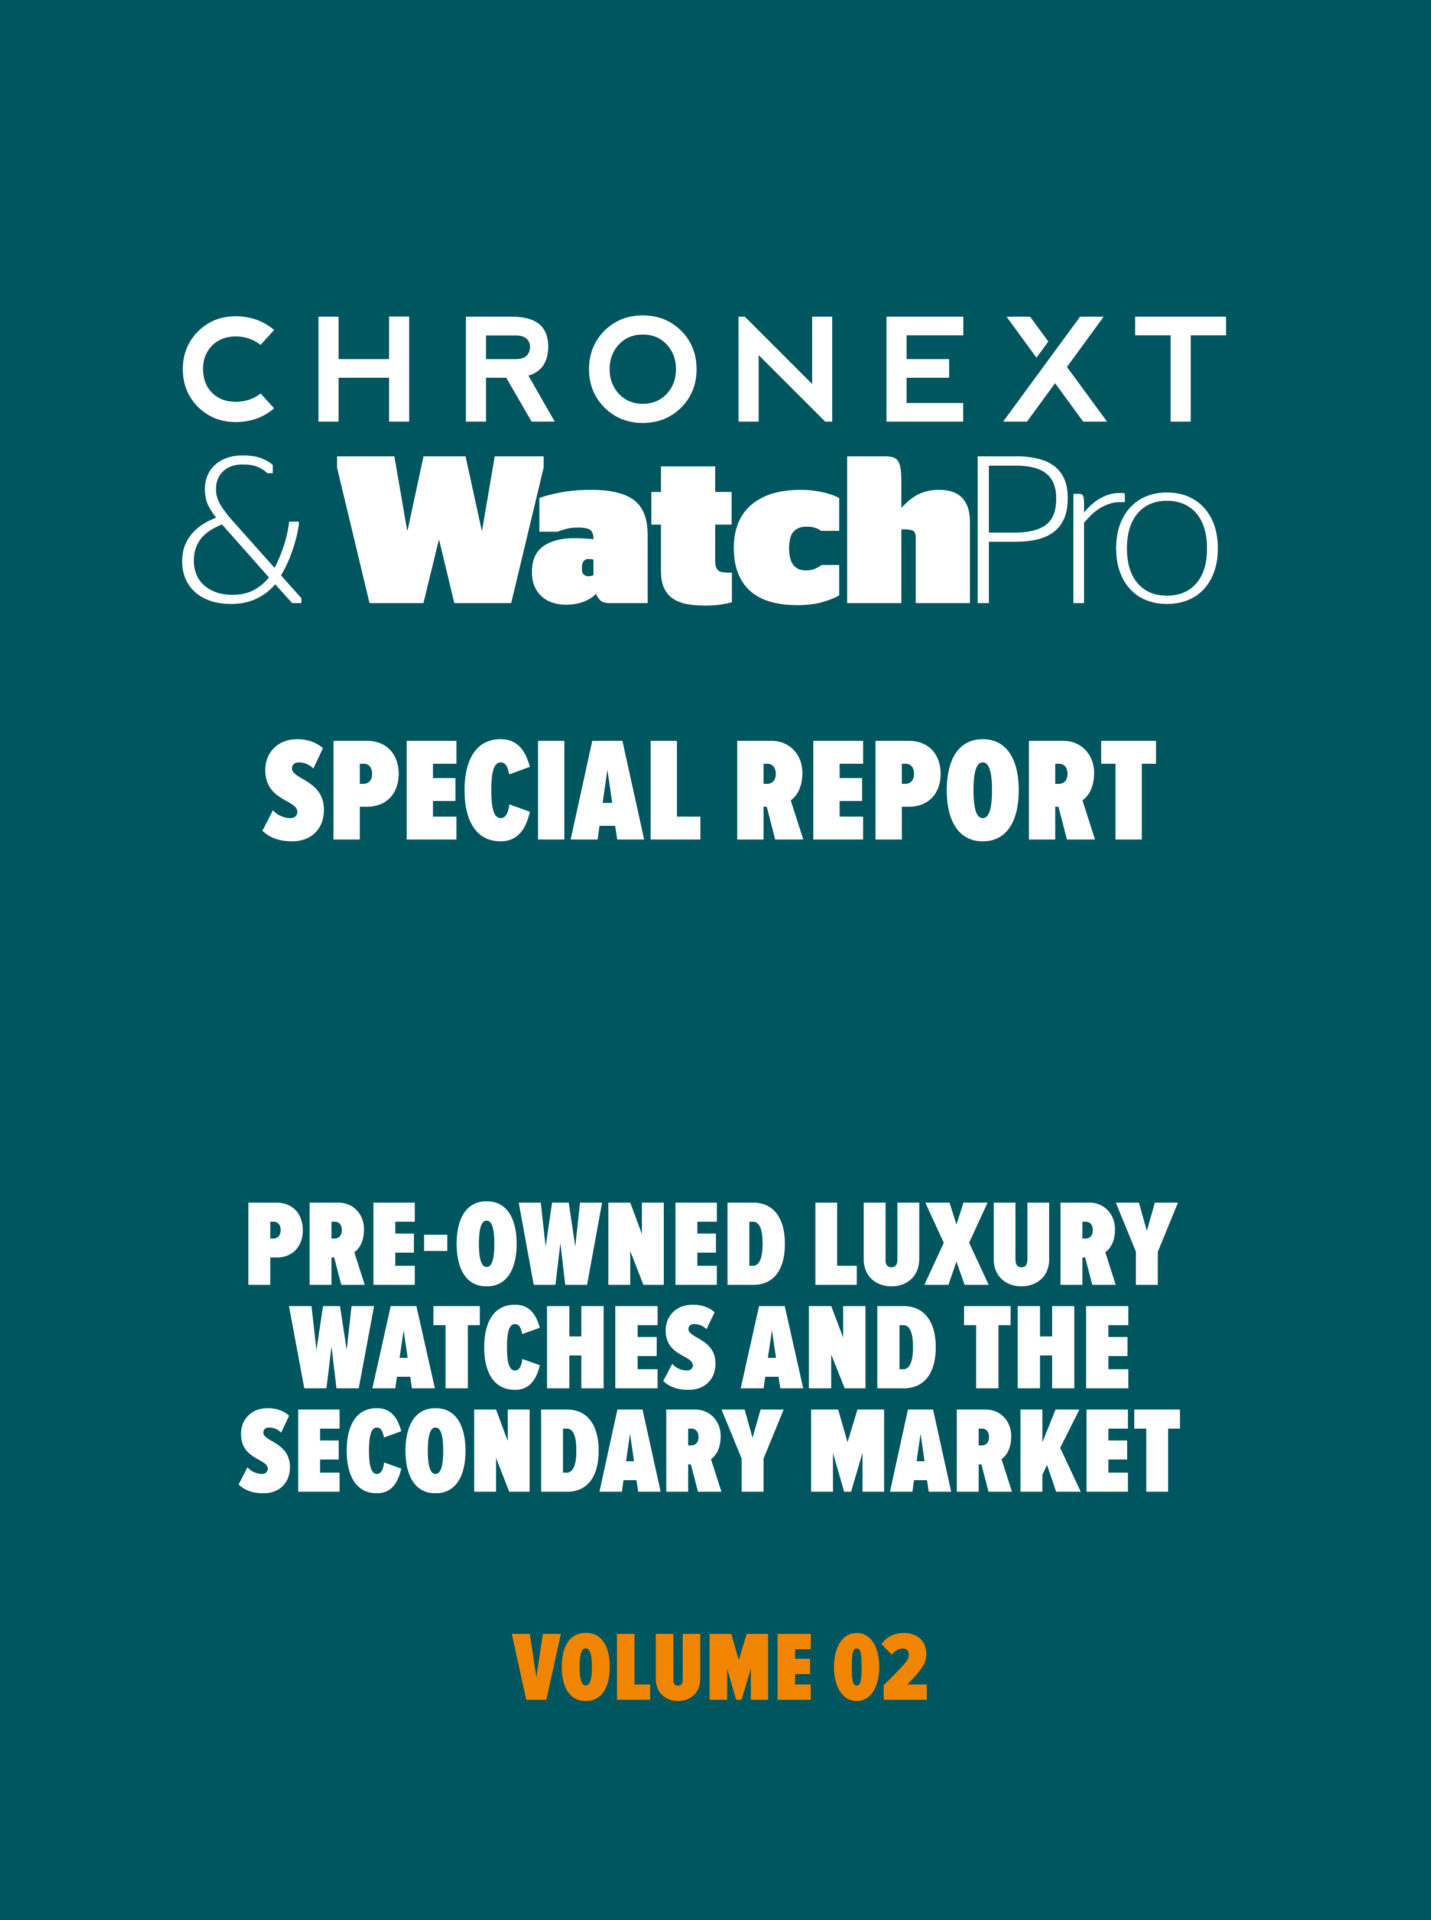 Chronext special report volume 2